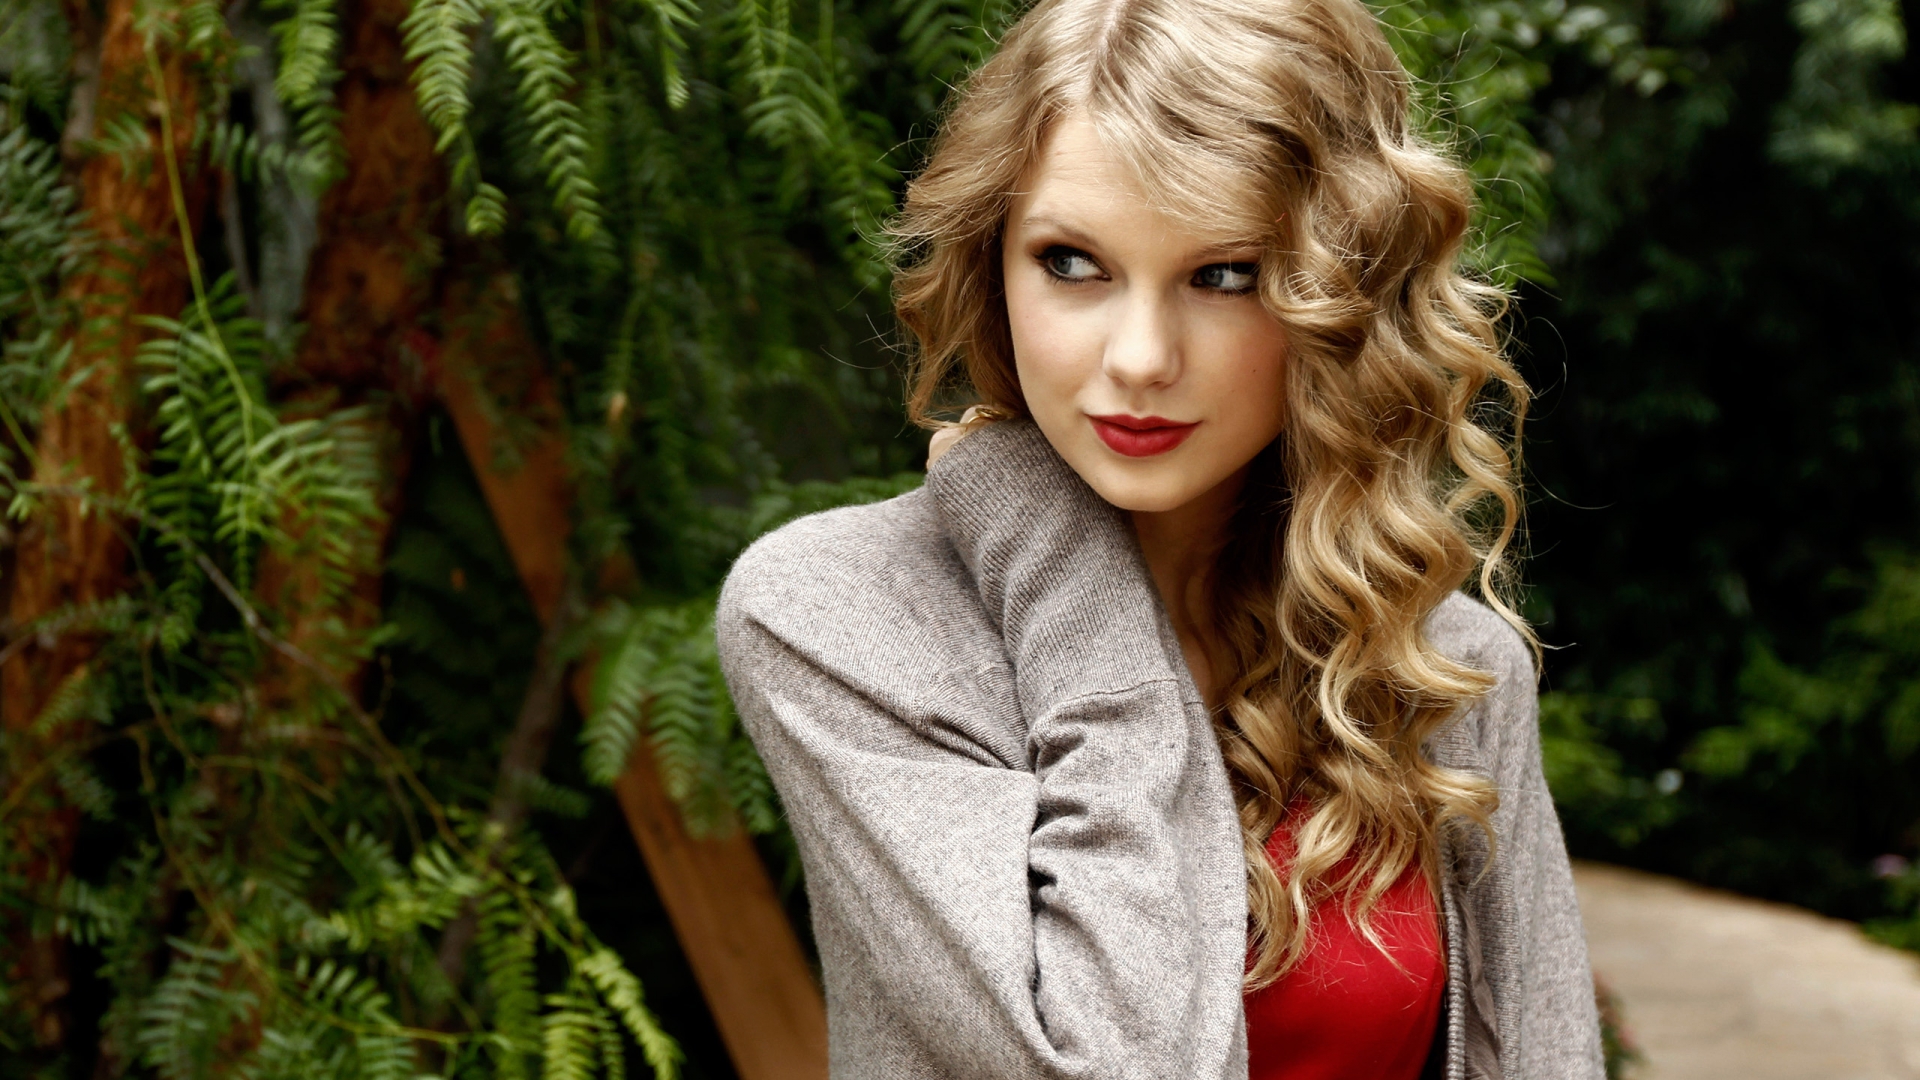 Wallpaper American Singer Taylor swift in garden, blonde hair